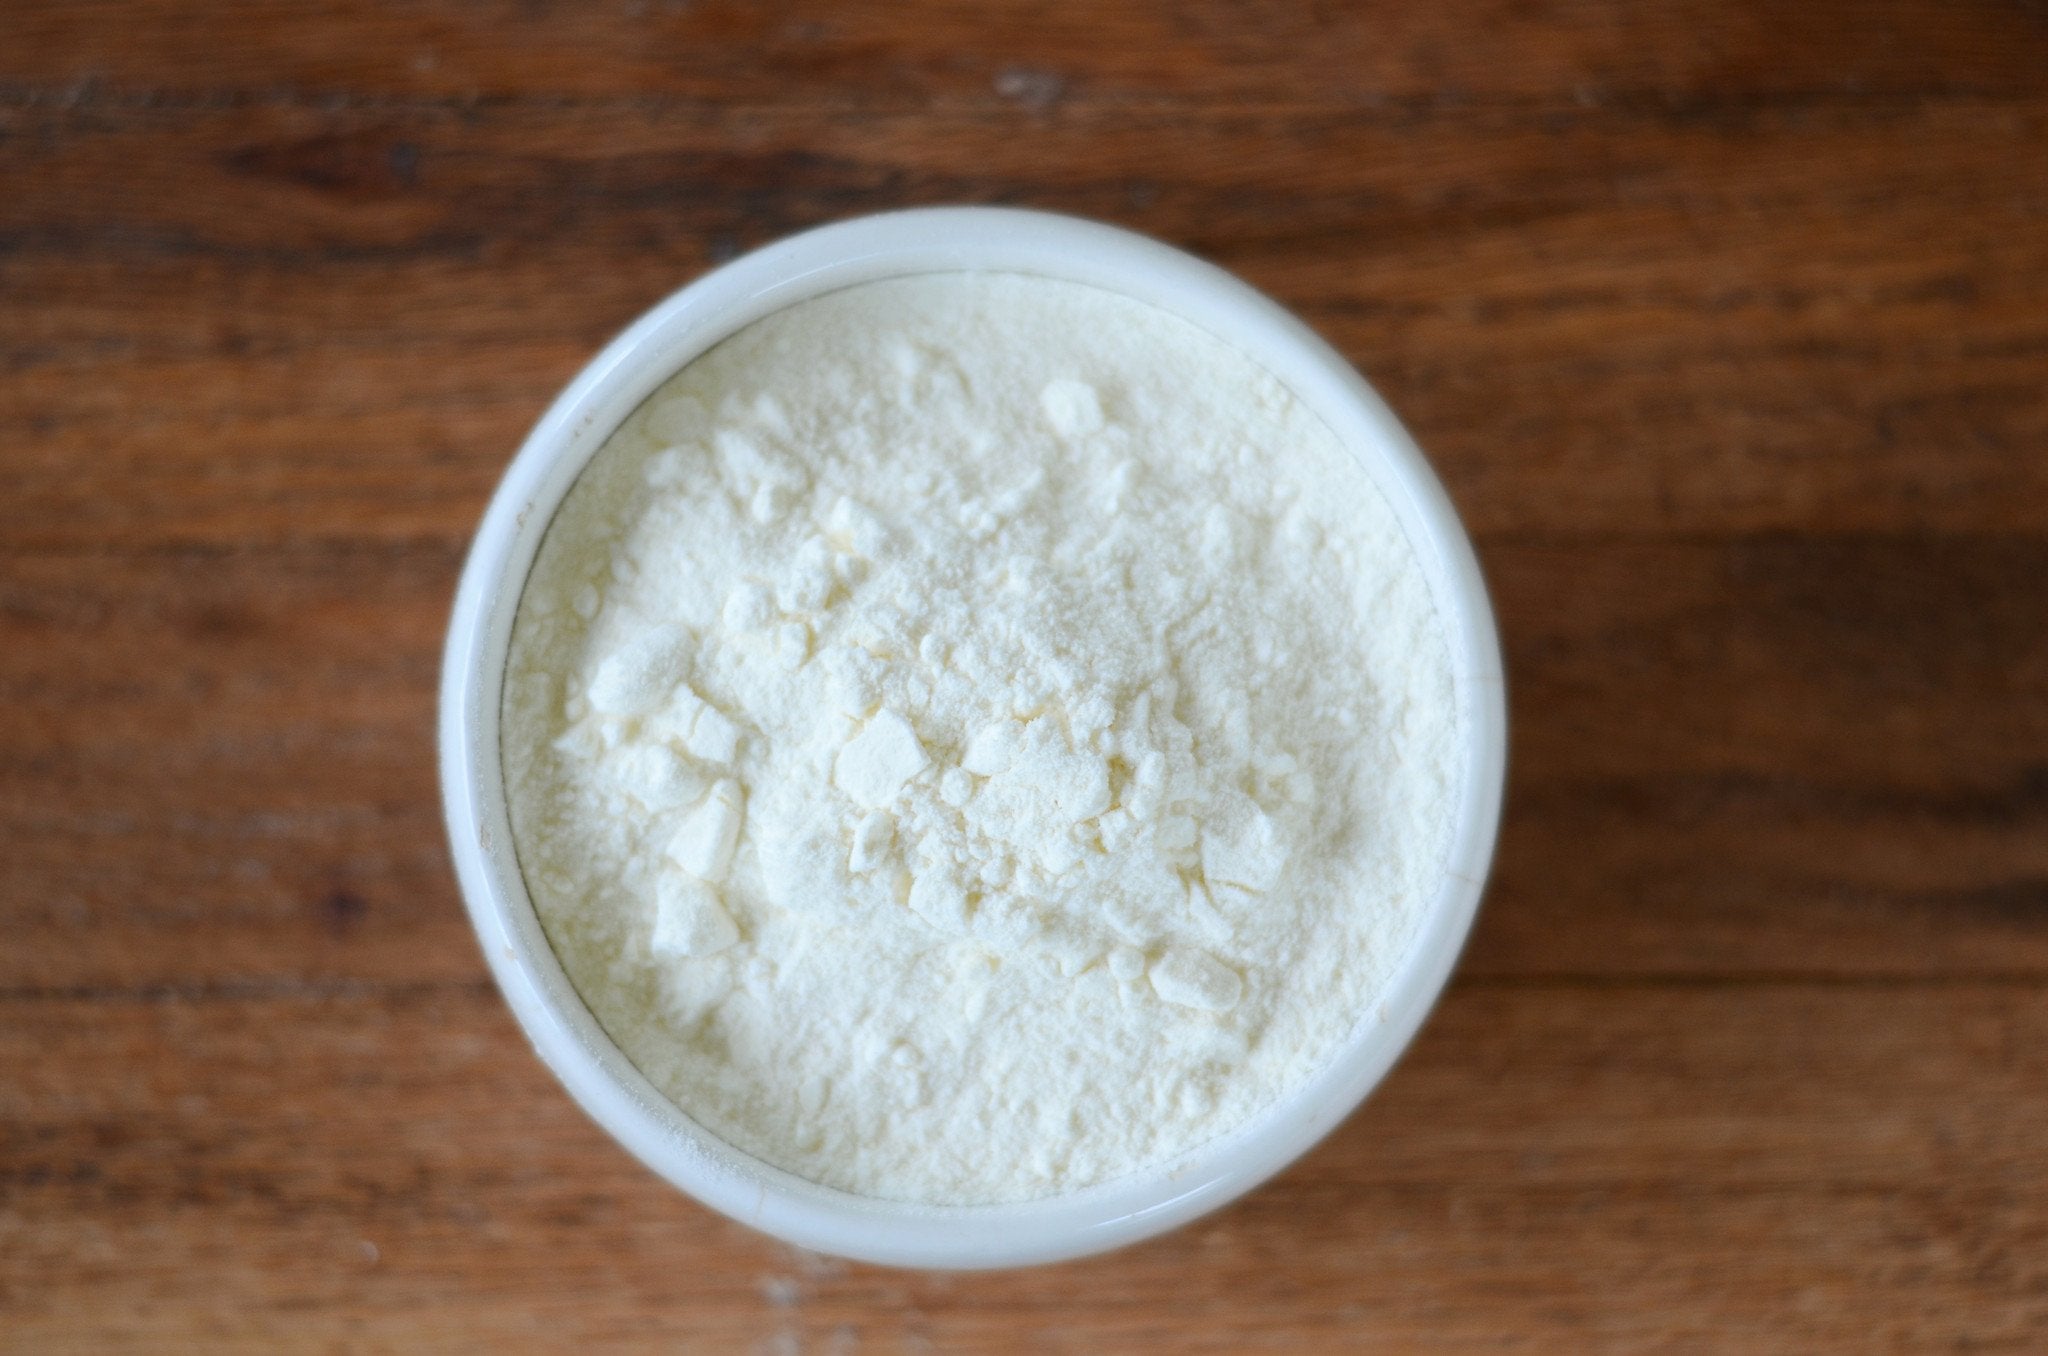 Heavy Cream Powder: Batch Tested Gluten-Free, Made in USA